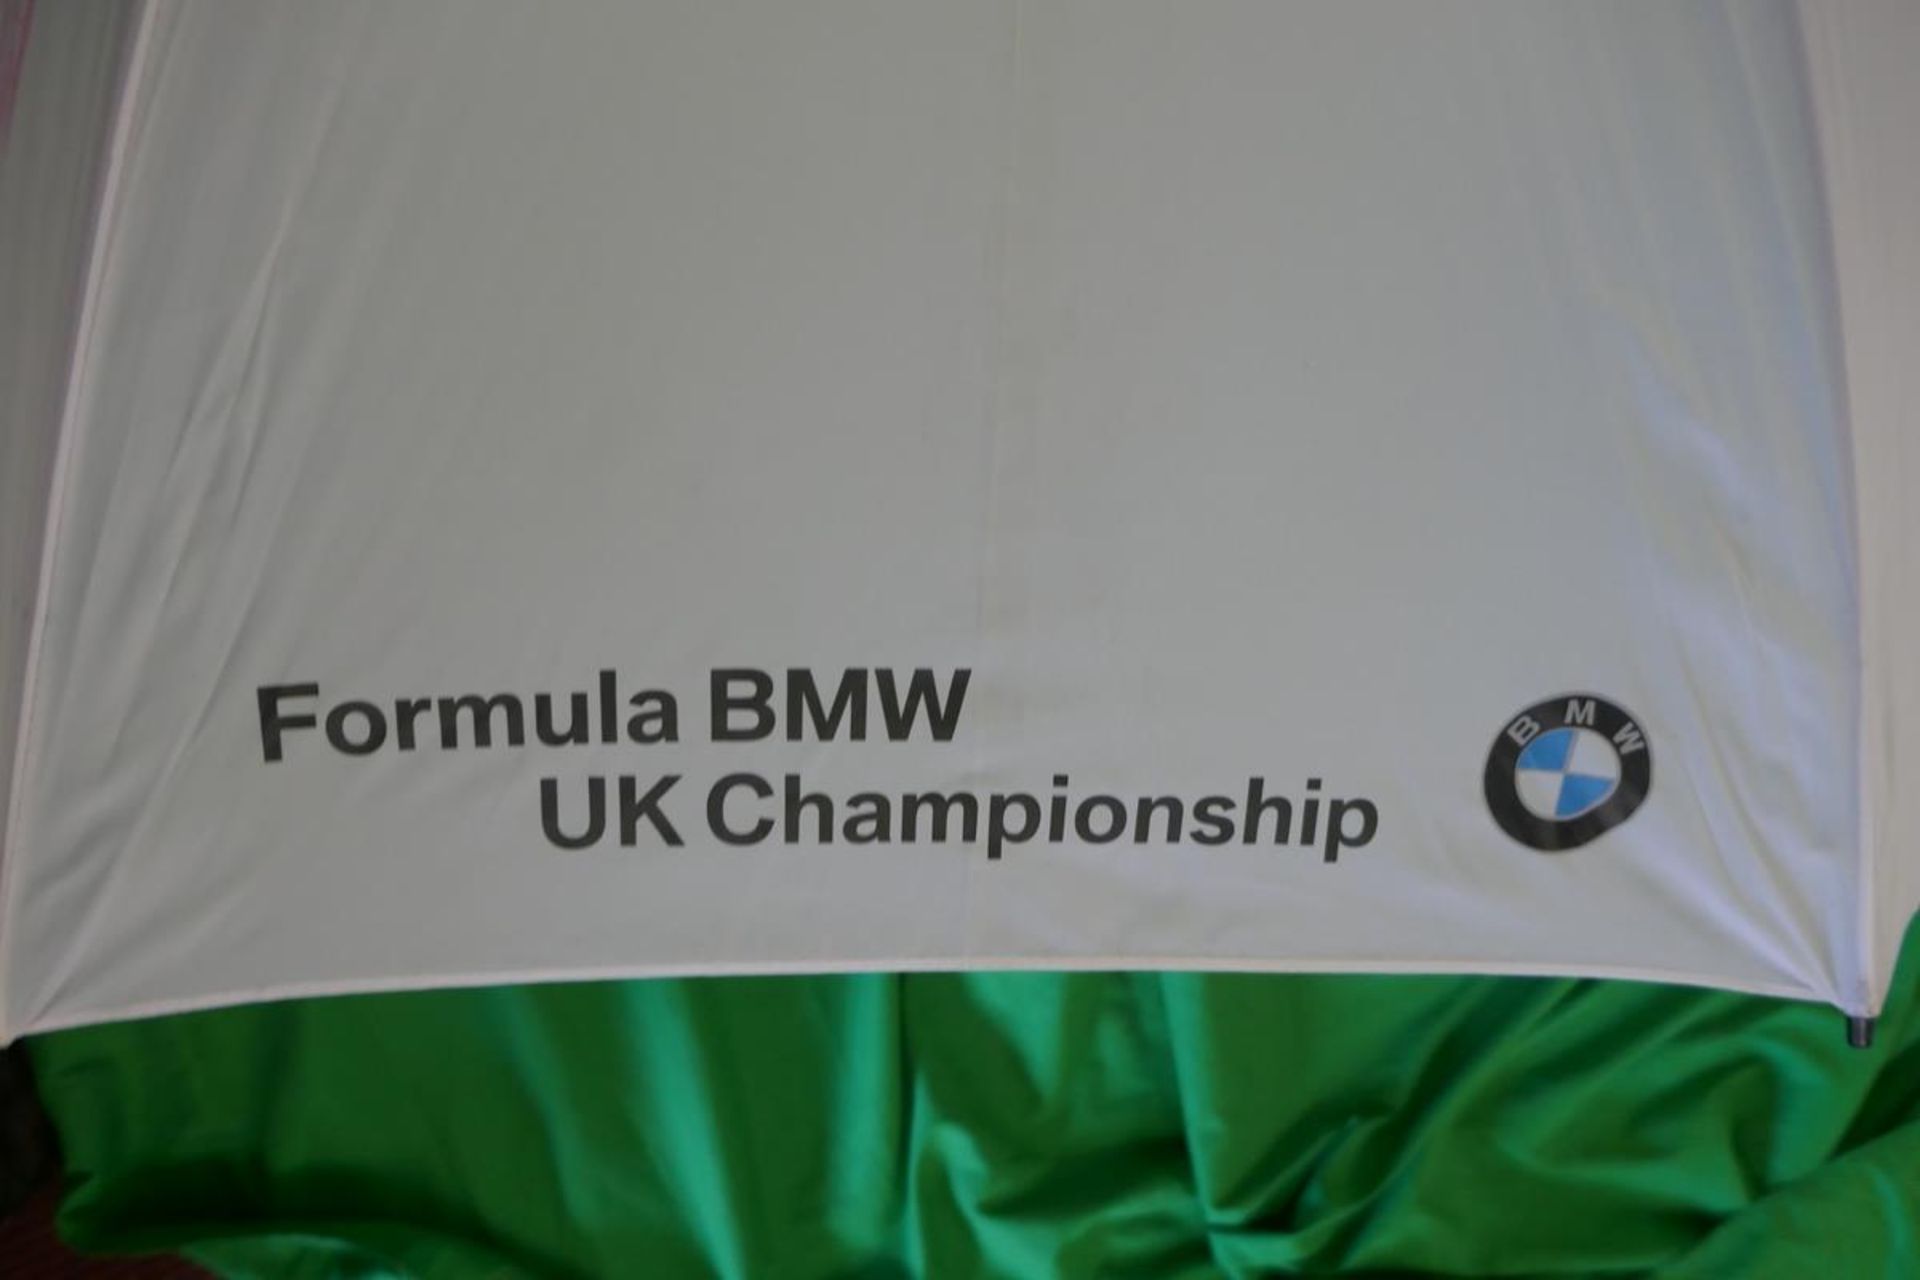 2 Formula BMW UK Championship jackets together with a BMW umbrella - Bild 7 aus 7